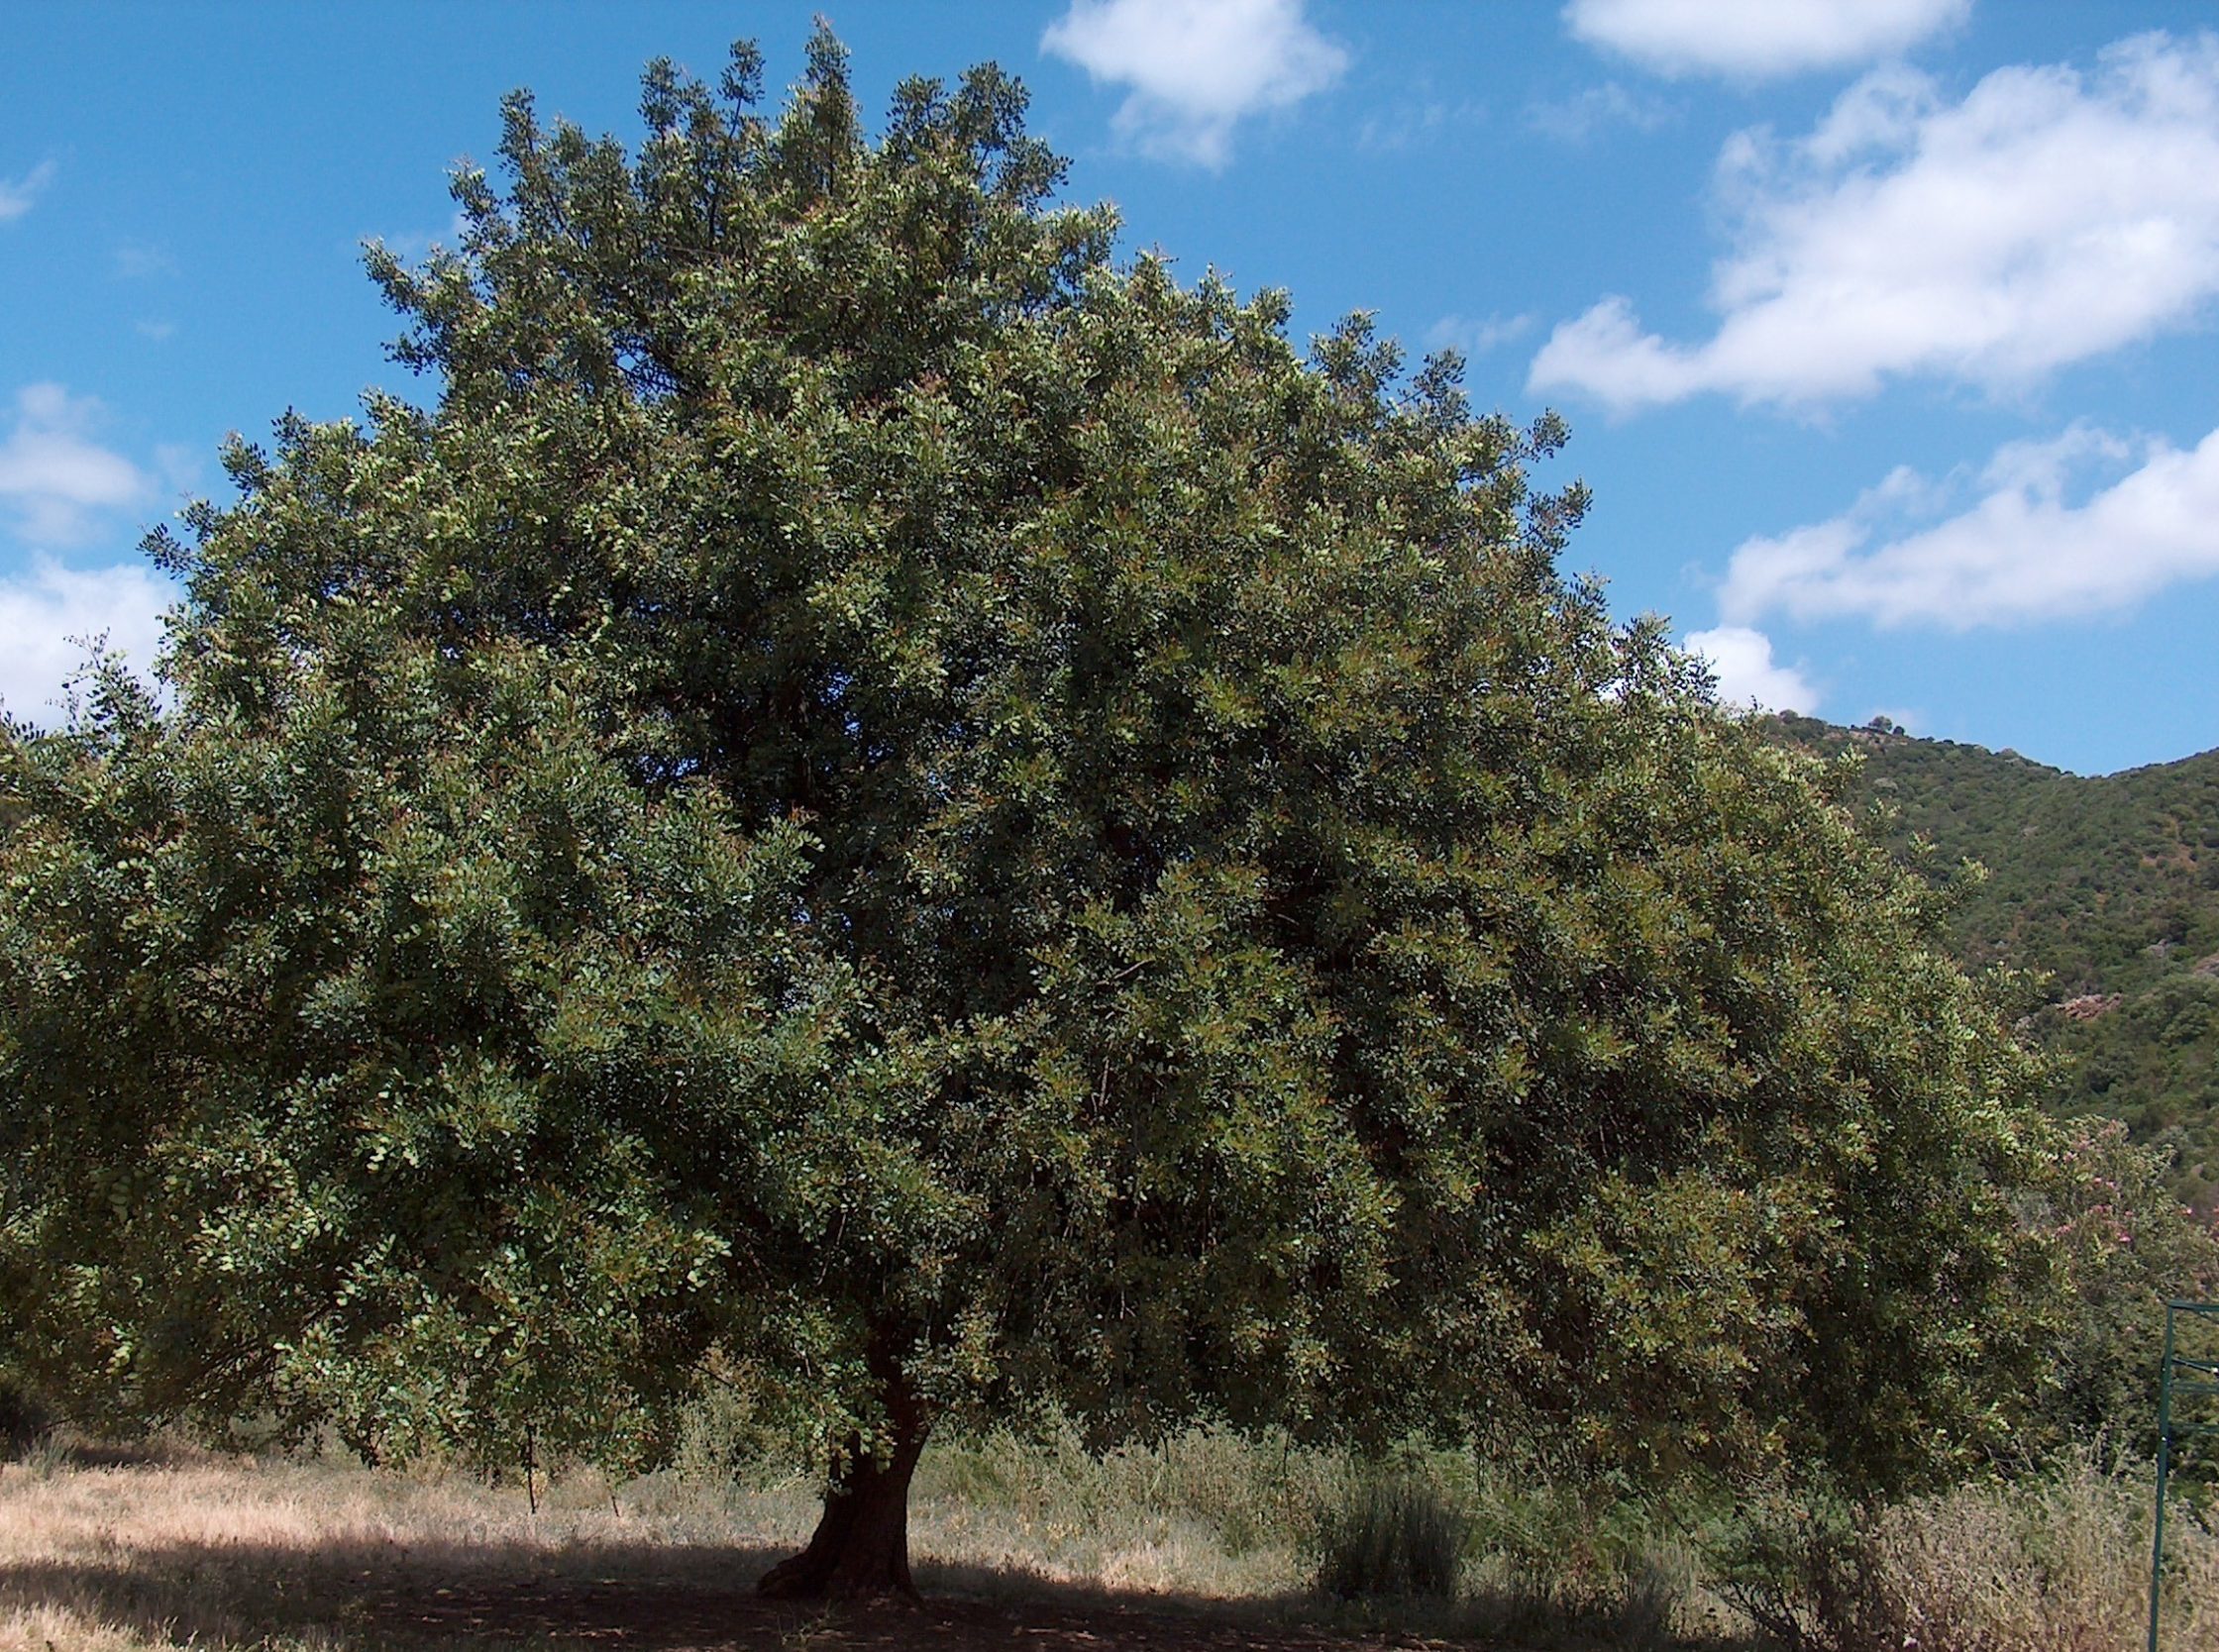 The Carob Tree